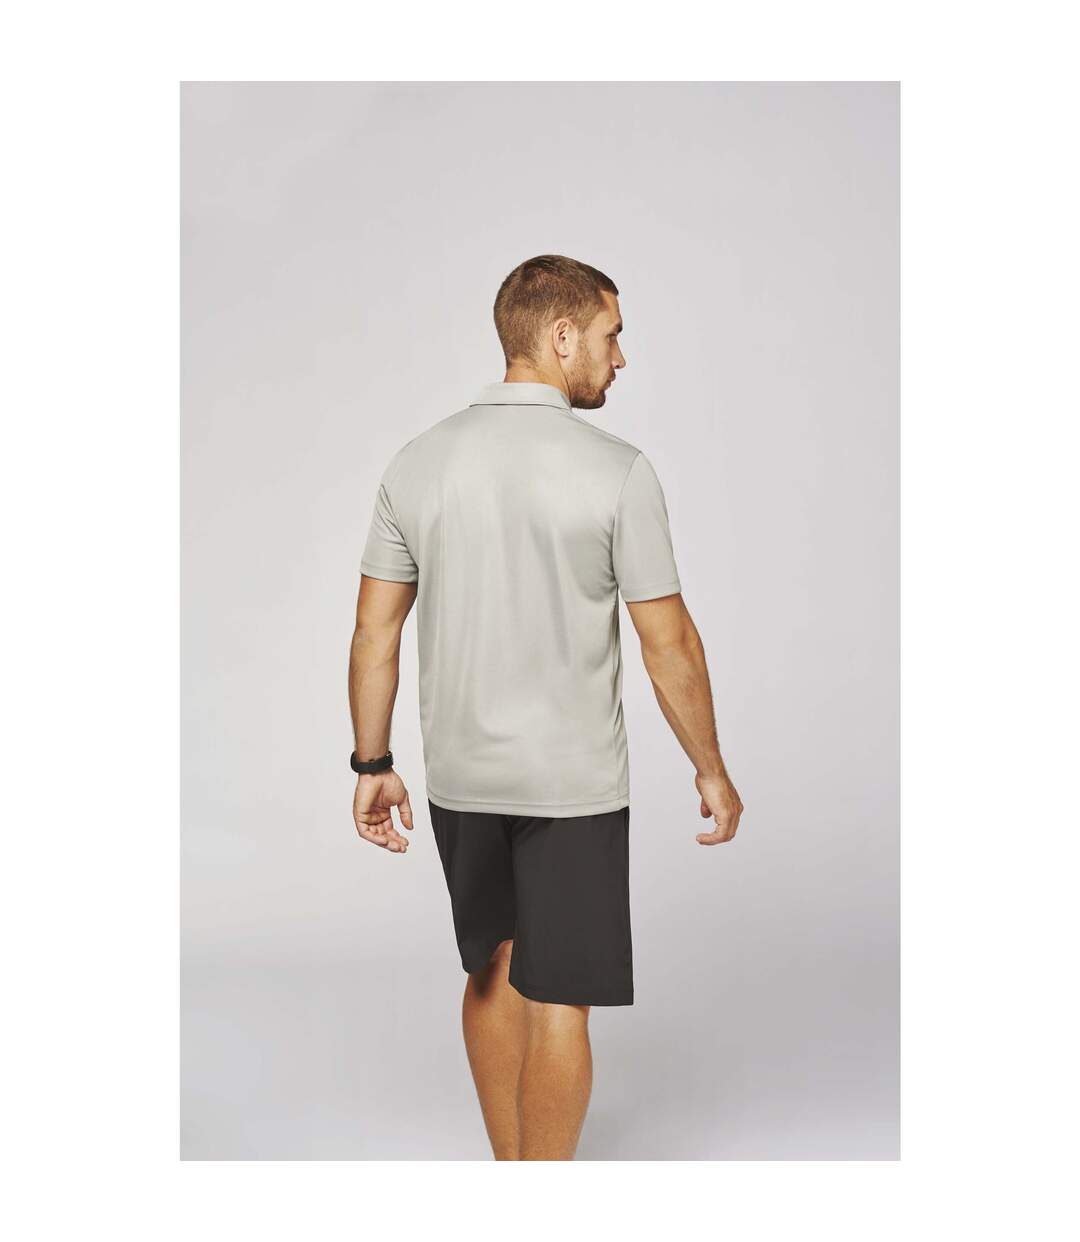 Kariban Proact Mens Short Sleeve Performance Polo Shirt (Fine Grey)